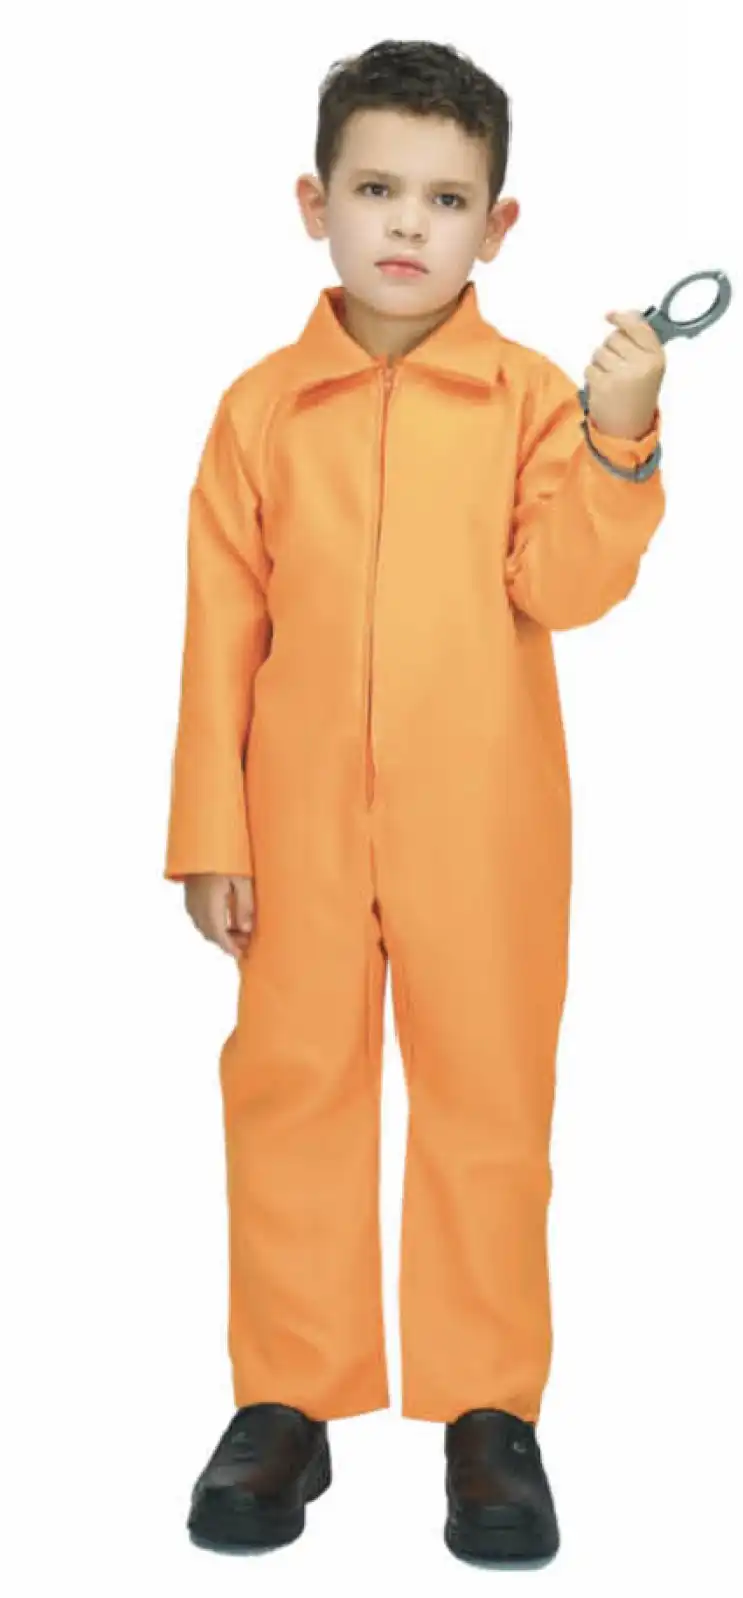 Kids Prisoner Boy Costume Halloween Convict Jail Kids Outfit Childrens - Orange